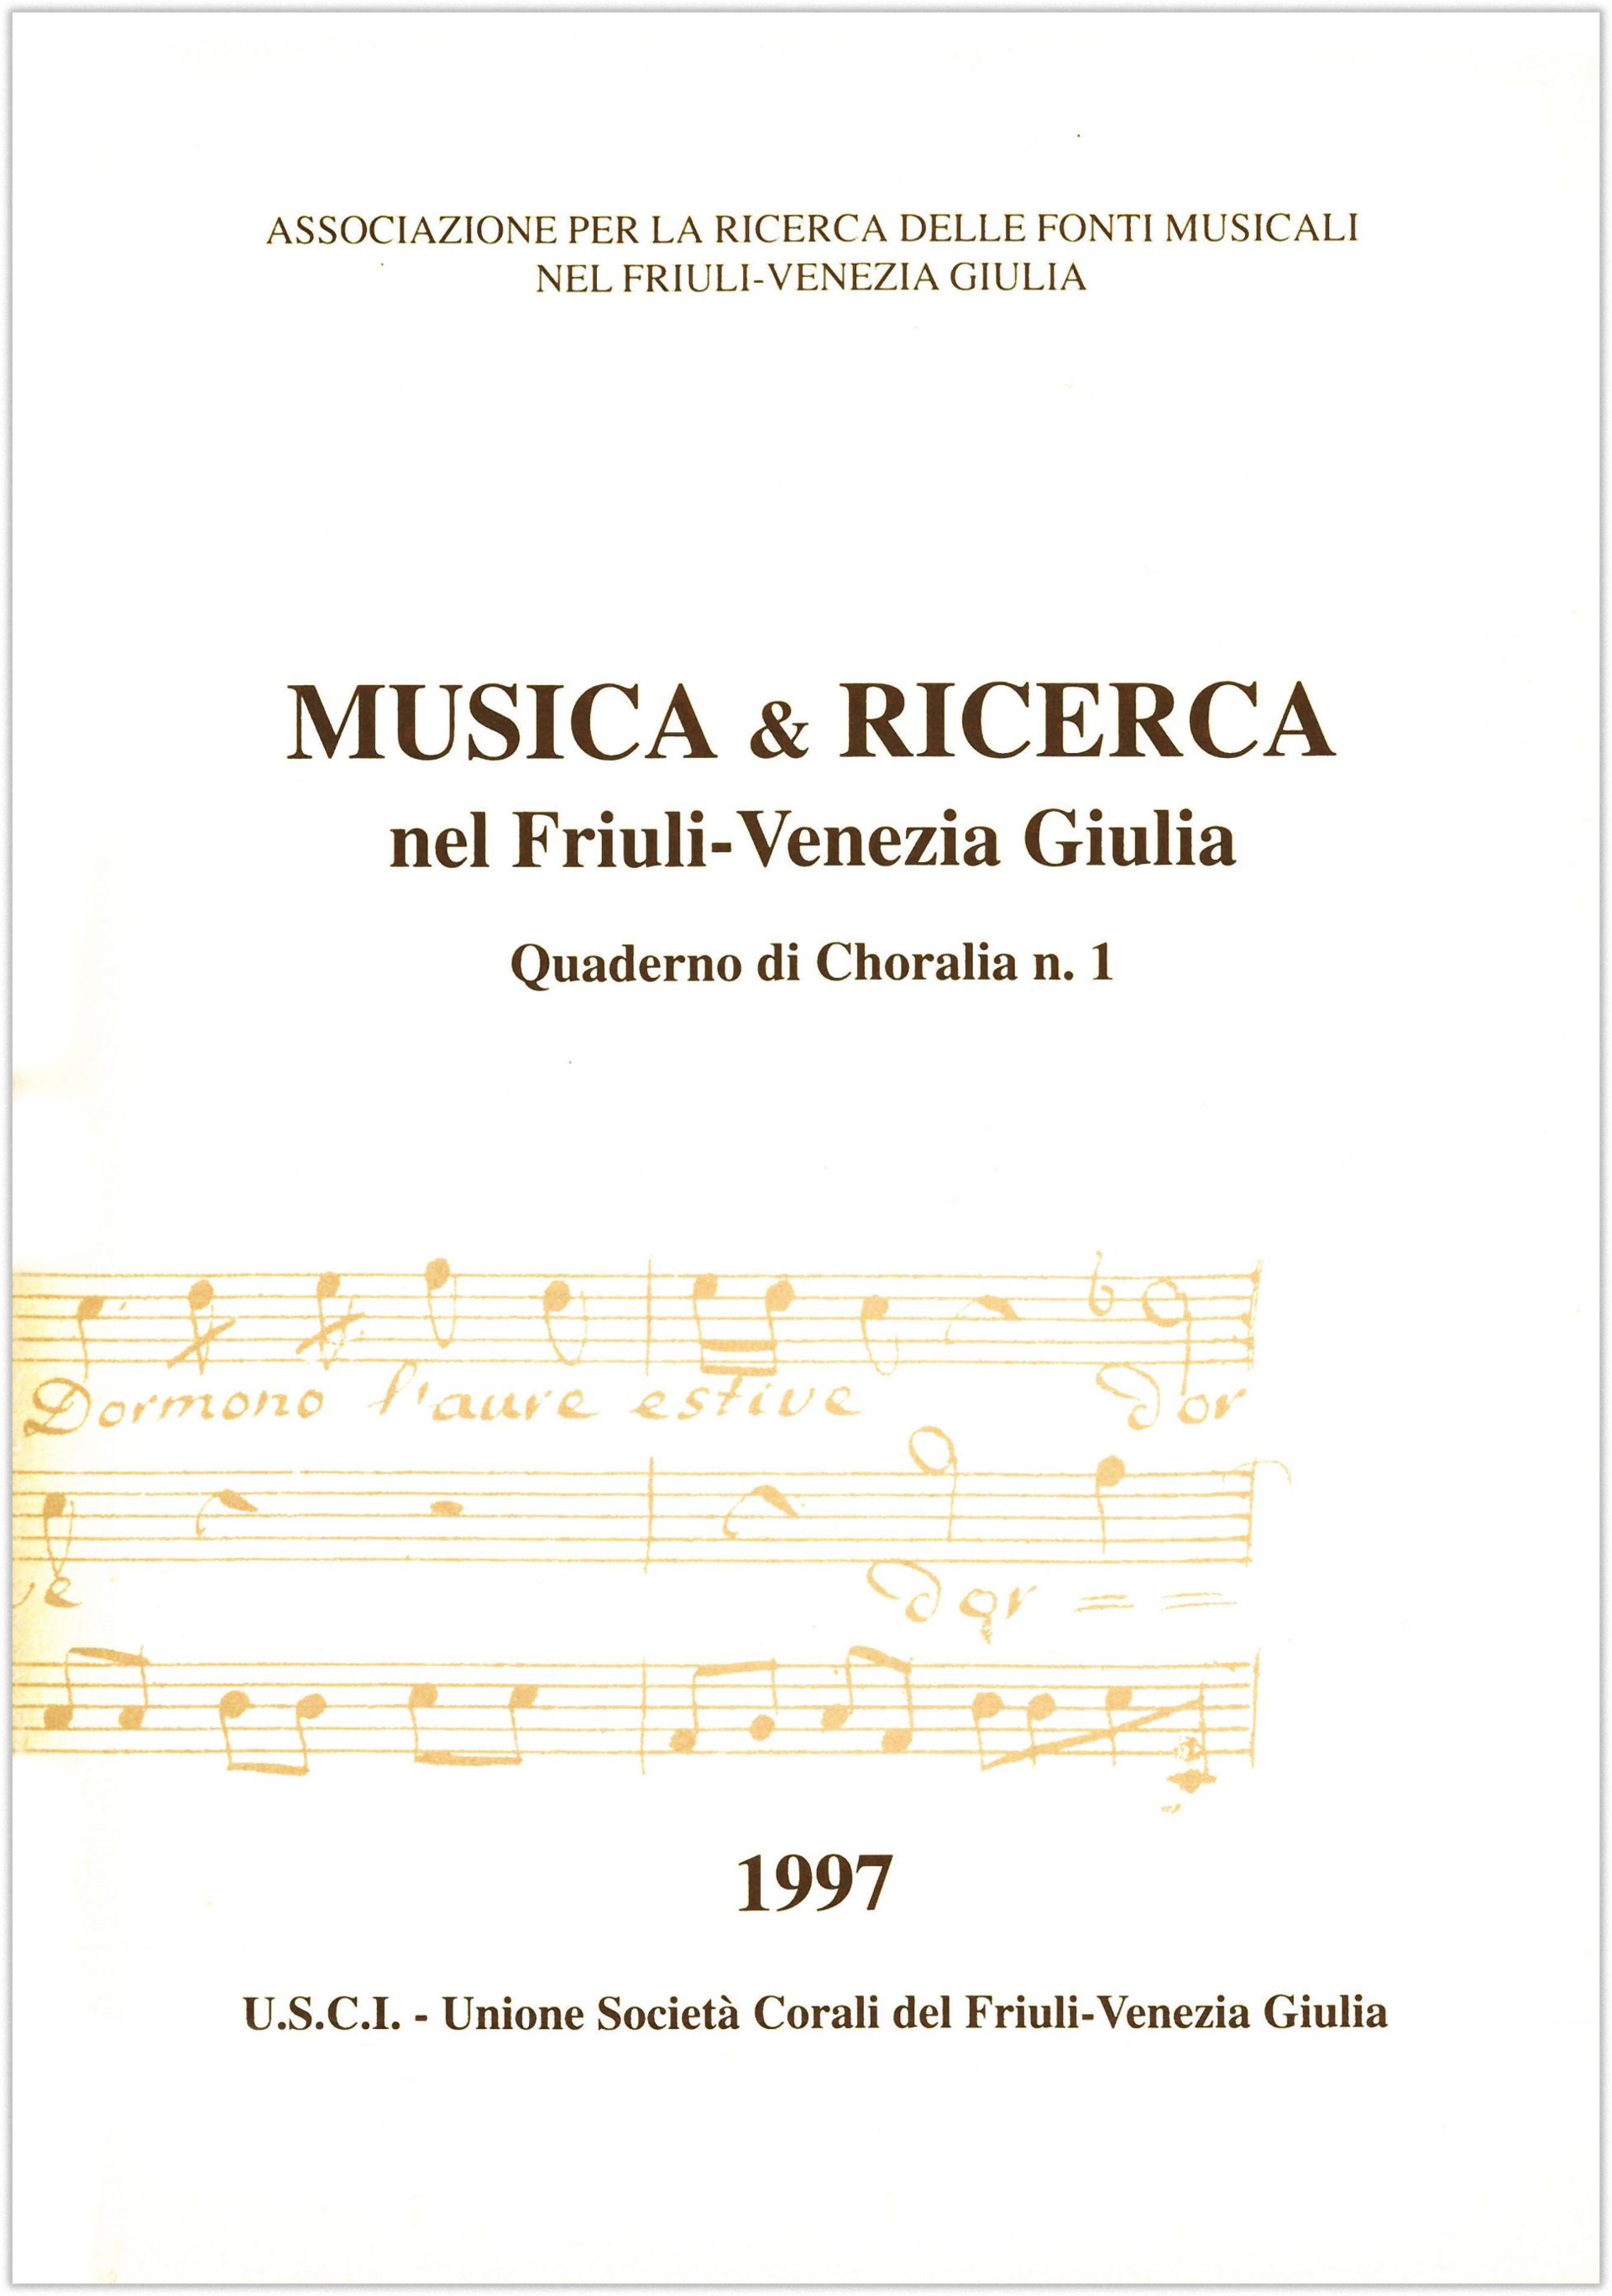 Musica_e_ricerca-1997-rit2.png